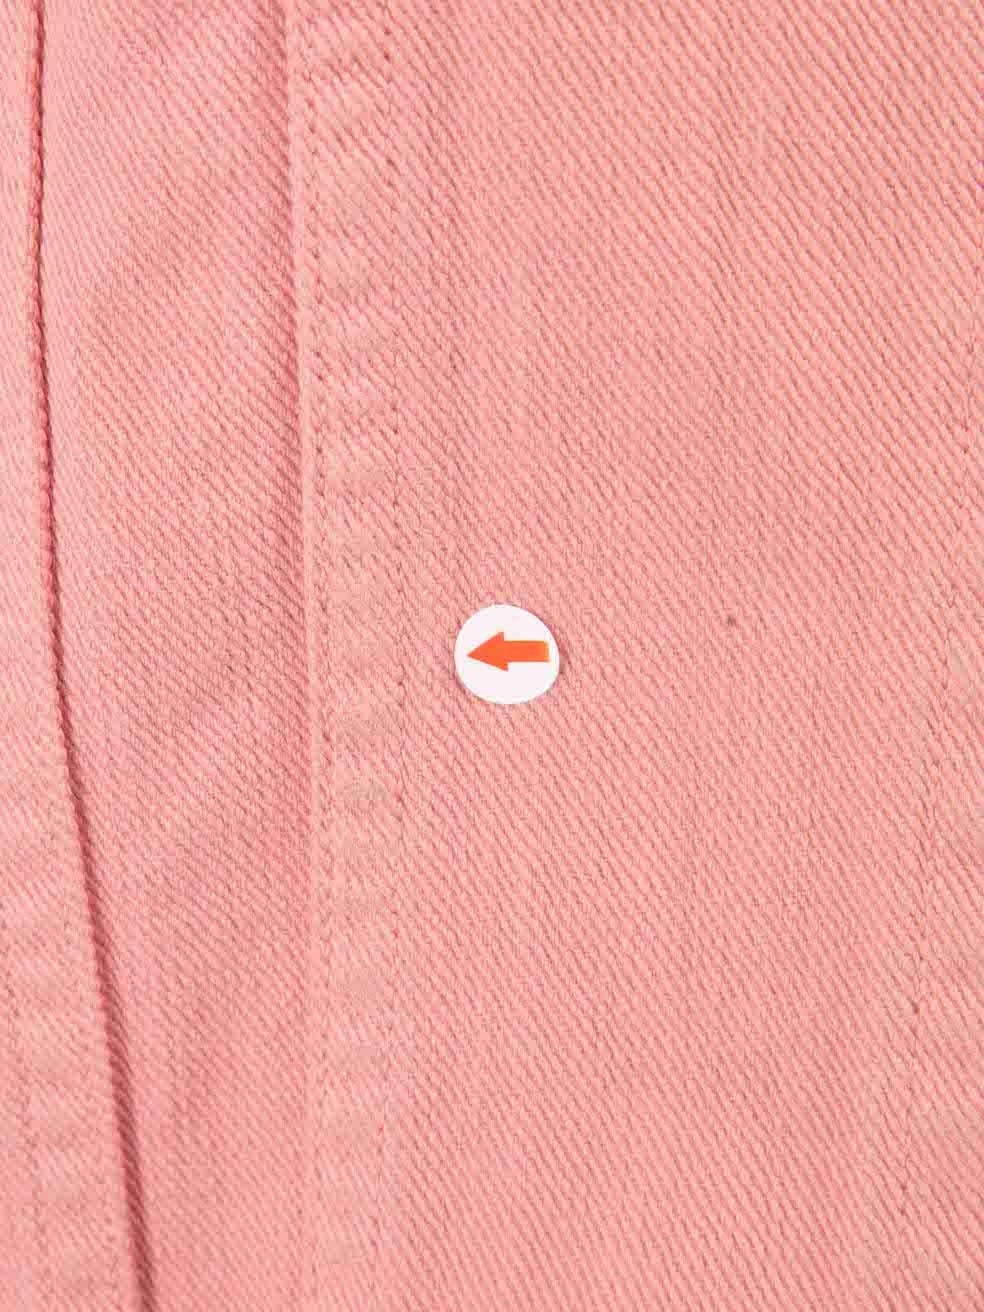 Marques Almeida Pink Frayed Edge Denim Jacket Size S For Sale 1